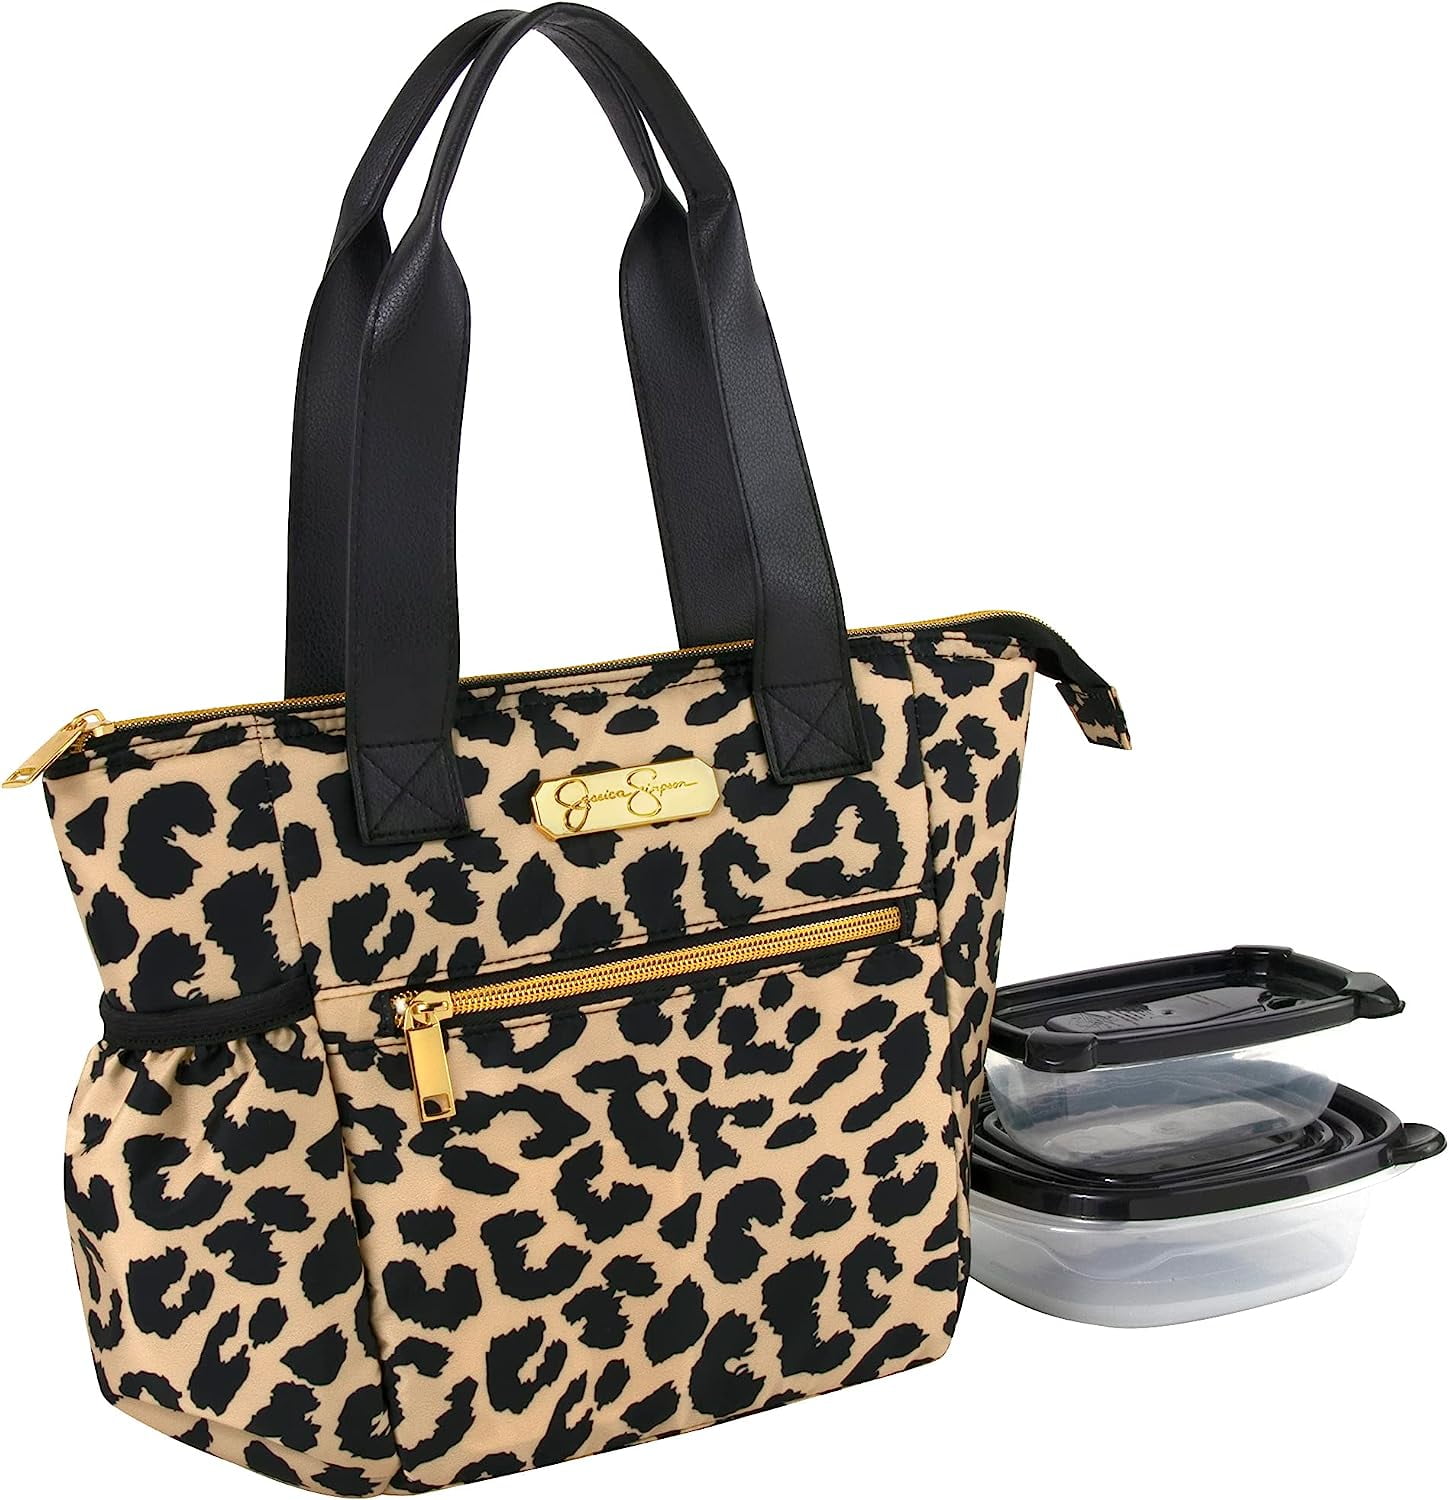 Jessica Simpson | Bags | Jessica Simpson Burnt Orange Handbag | Poshmark